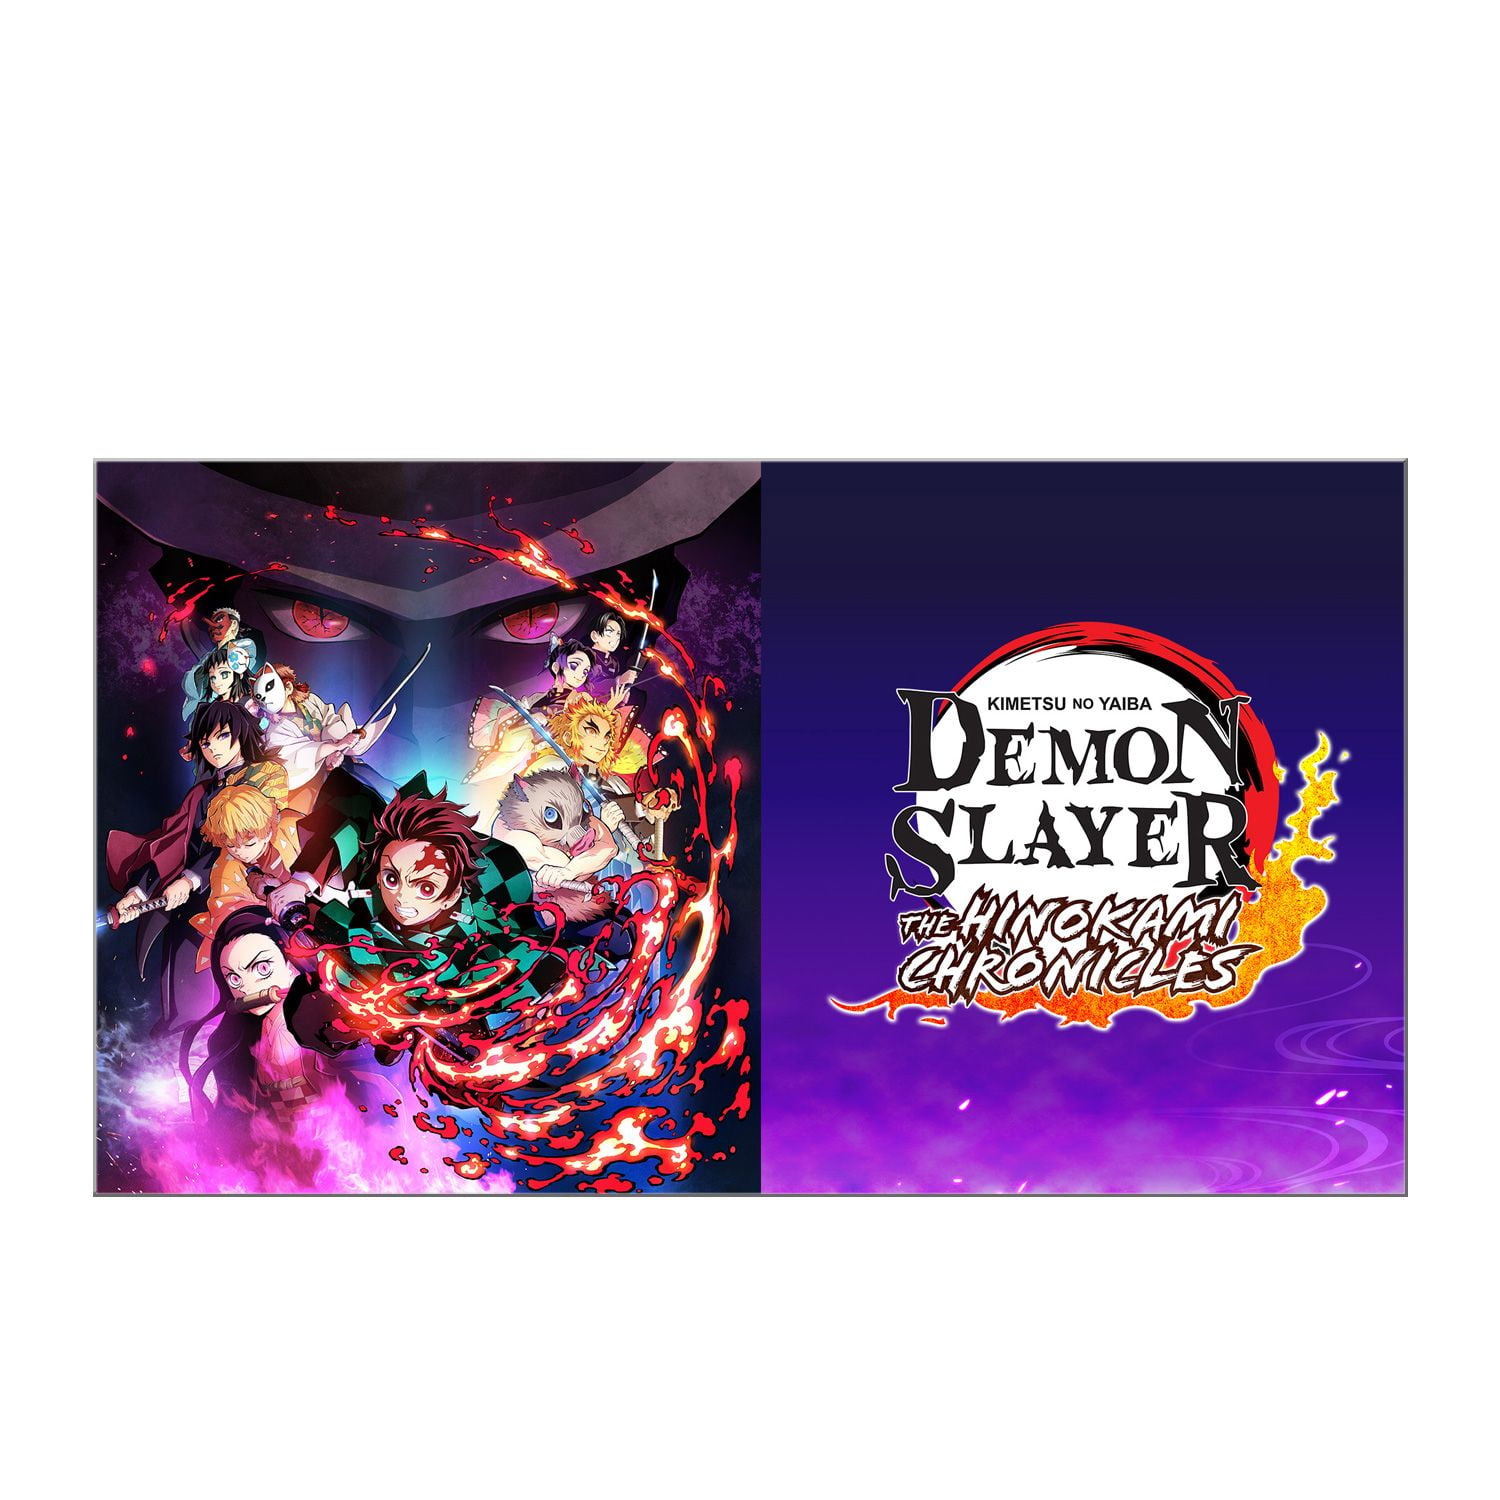 Demon Slayer: Kimetsu no Yaiba – The Hinokami limited edition SWITCH